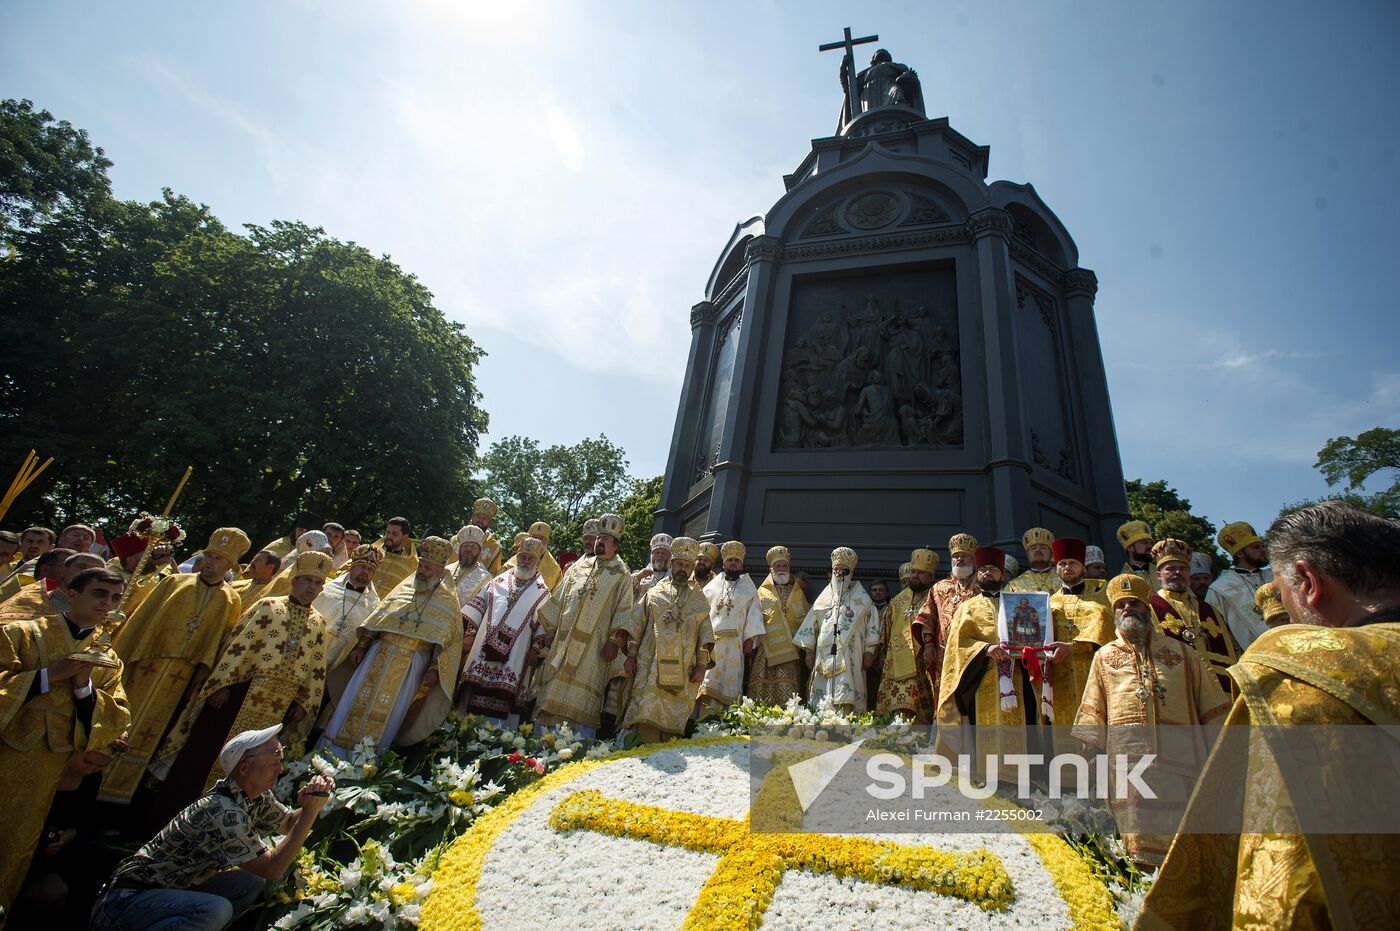 Kiev celebrates 1025th anniversary of Baptism of Kievan Rus